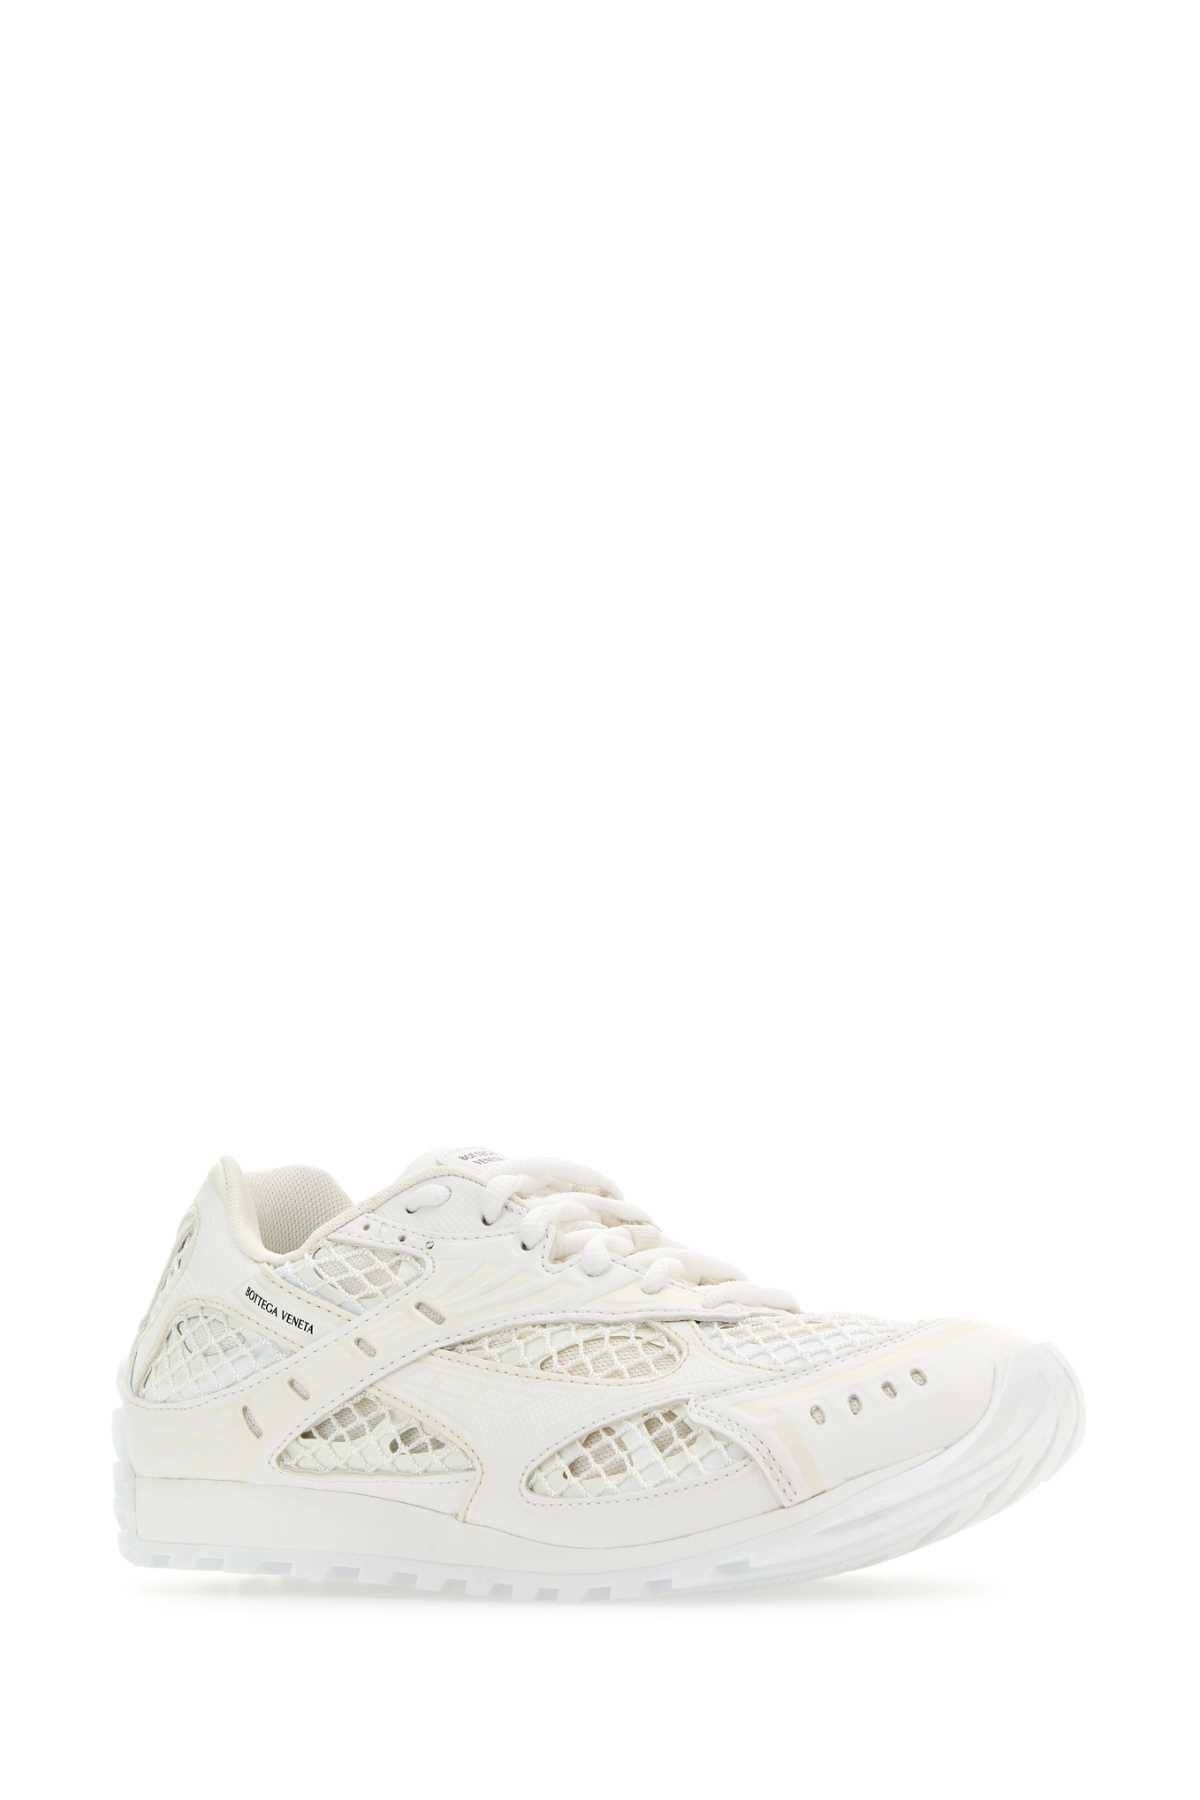 Shop Bottega Veneta White Orbit Sneakers